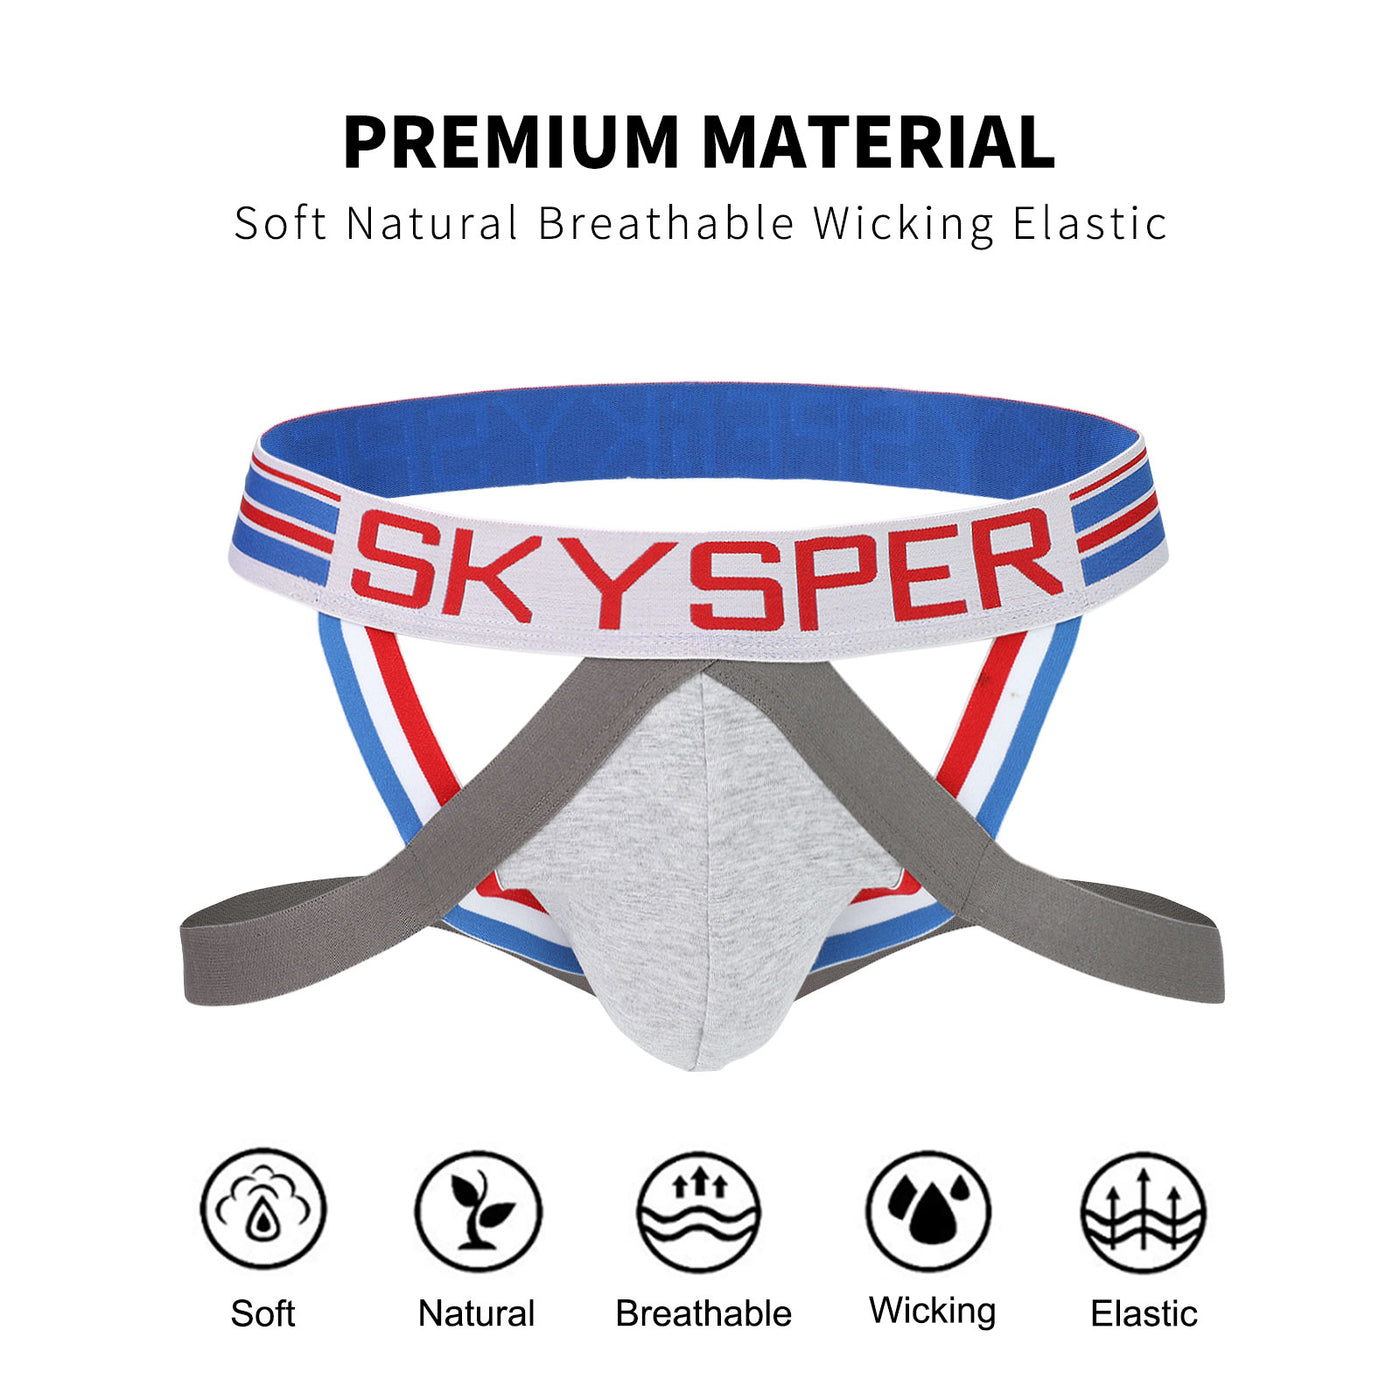 SKYSPER 27SK - Men's Cotton Jockstrap Underwear Athletic Supporter